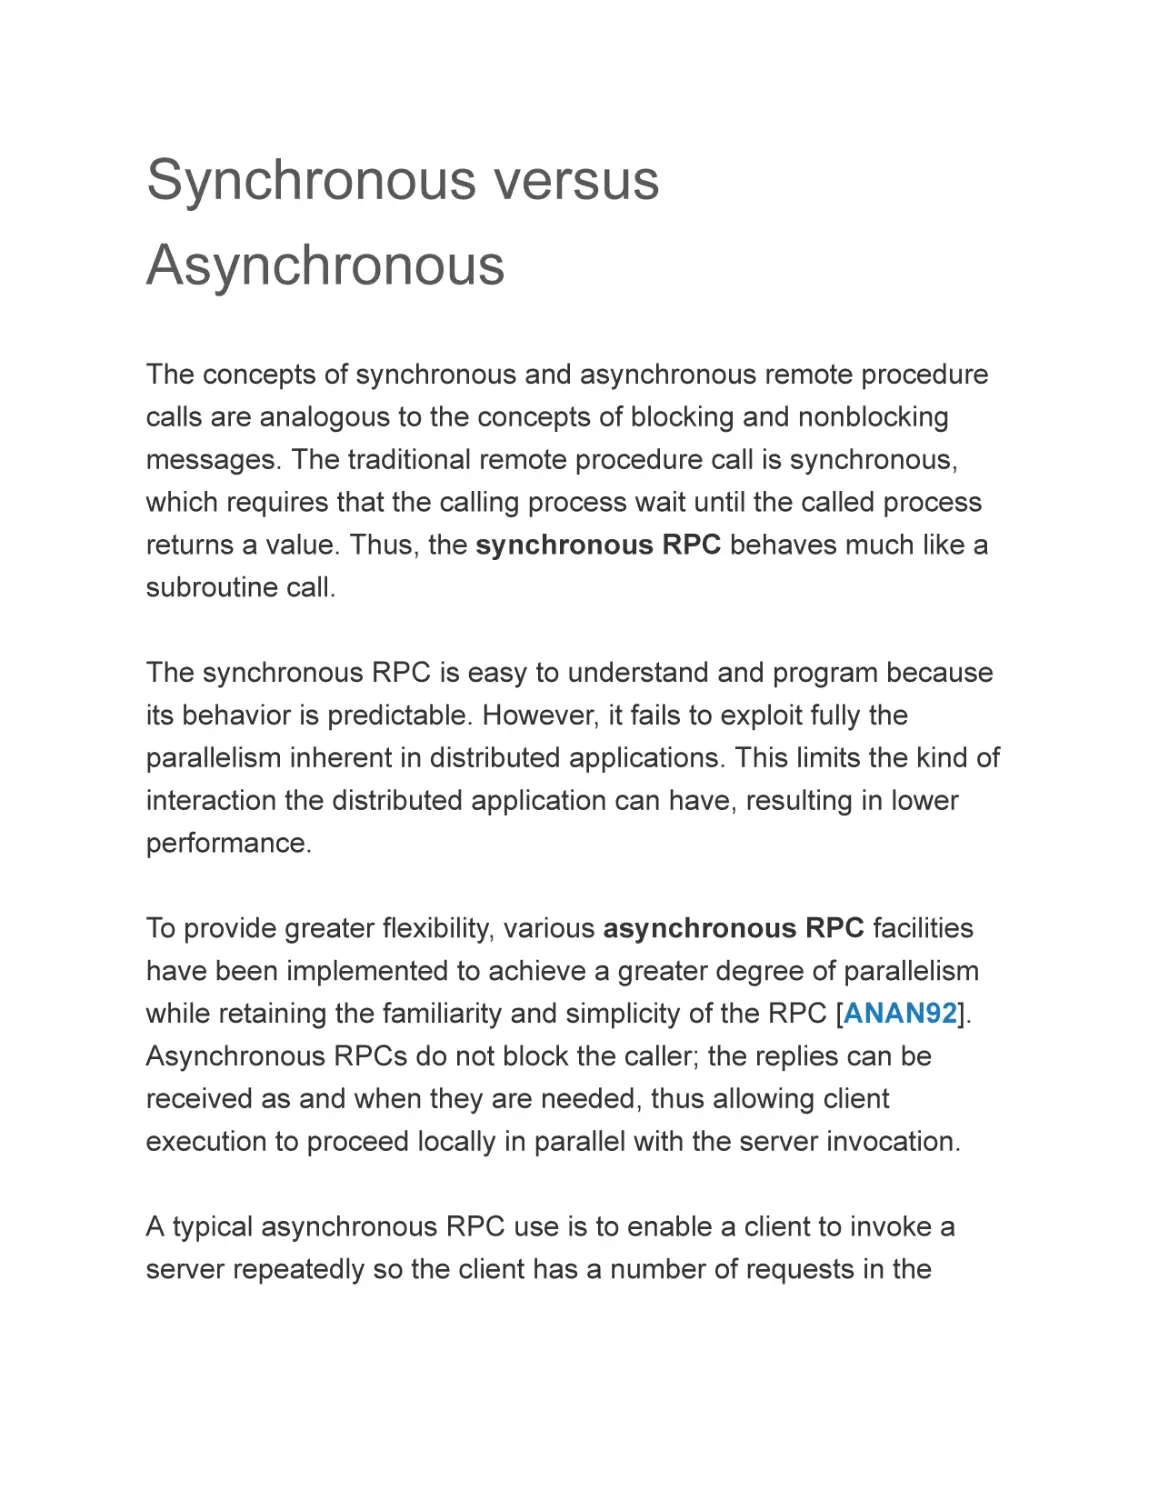 Synchronous versus Asynchronous